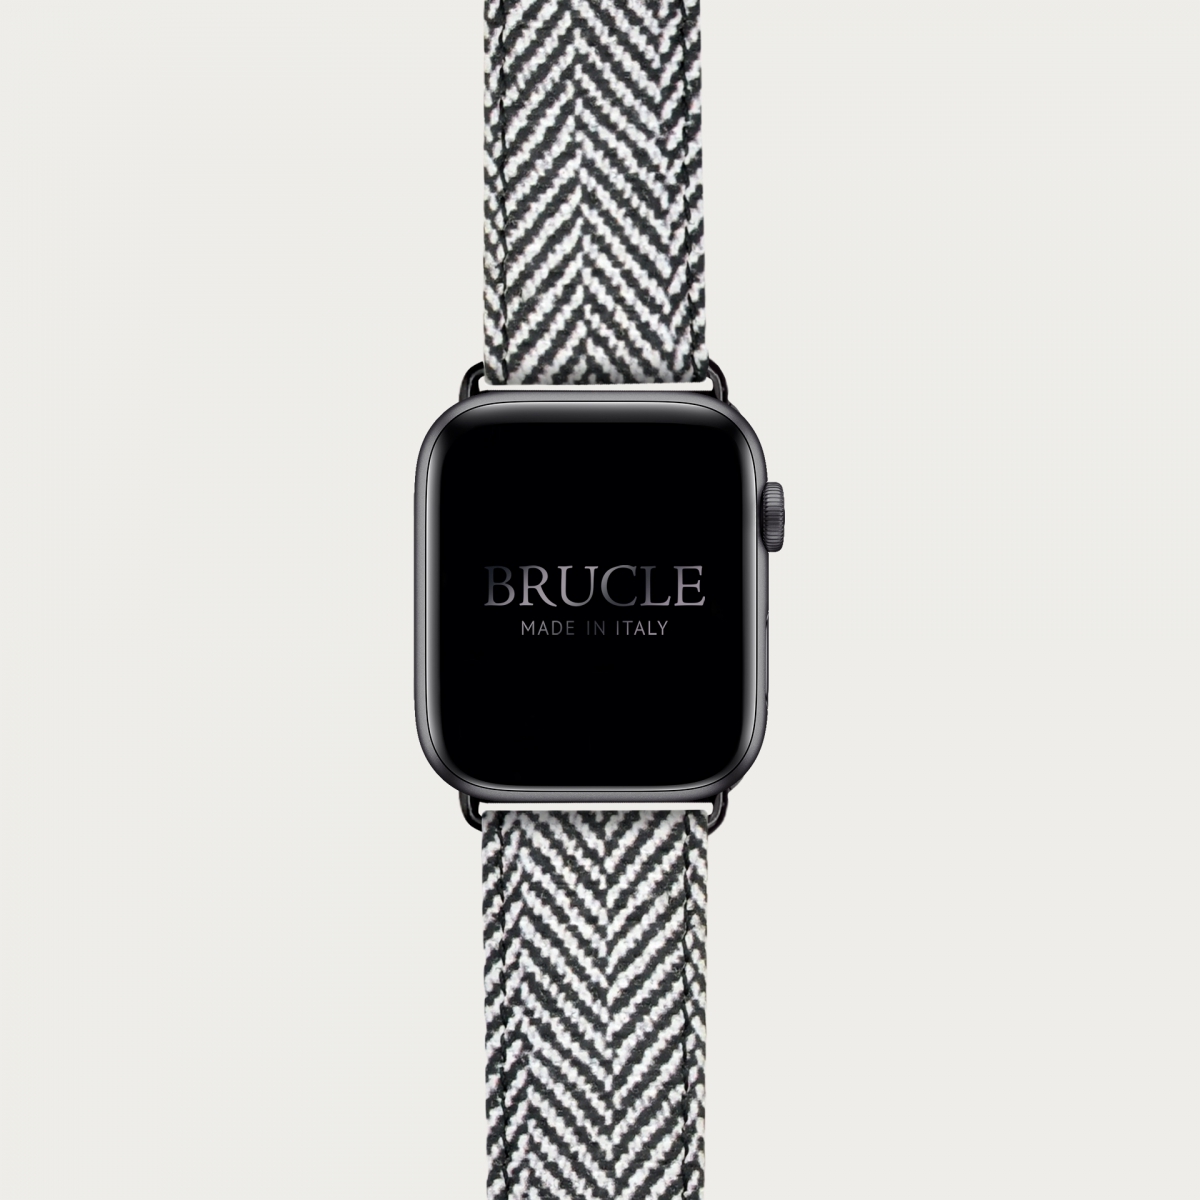 BRUCLE Armband kompatibel mit Apple Watch / Samsung Smartwatch, leder mit tartan-print